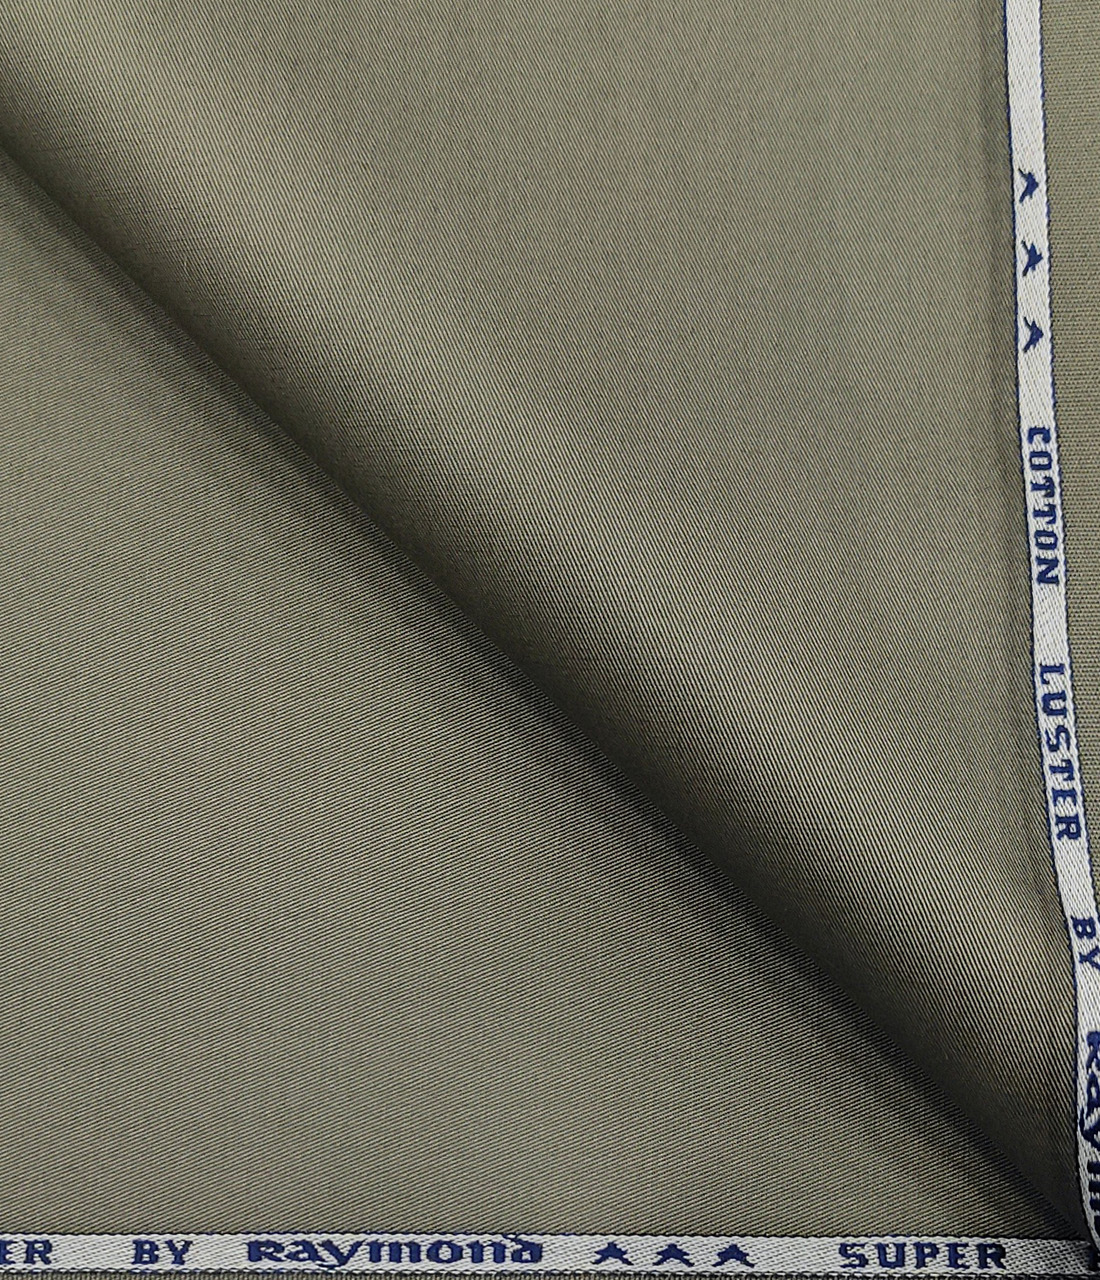 Raymond Linen Self Design Trouser Fabric Price in India - Buy Raymond Linen  Self Design Trouser Fabric online at Flipkart.com